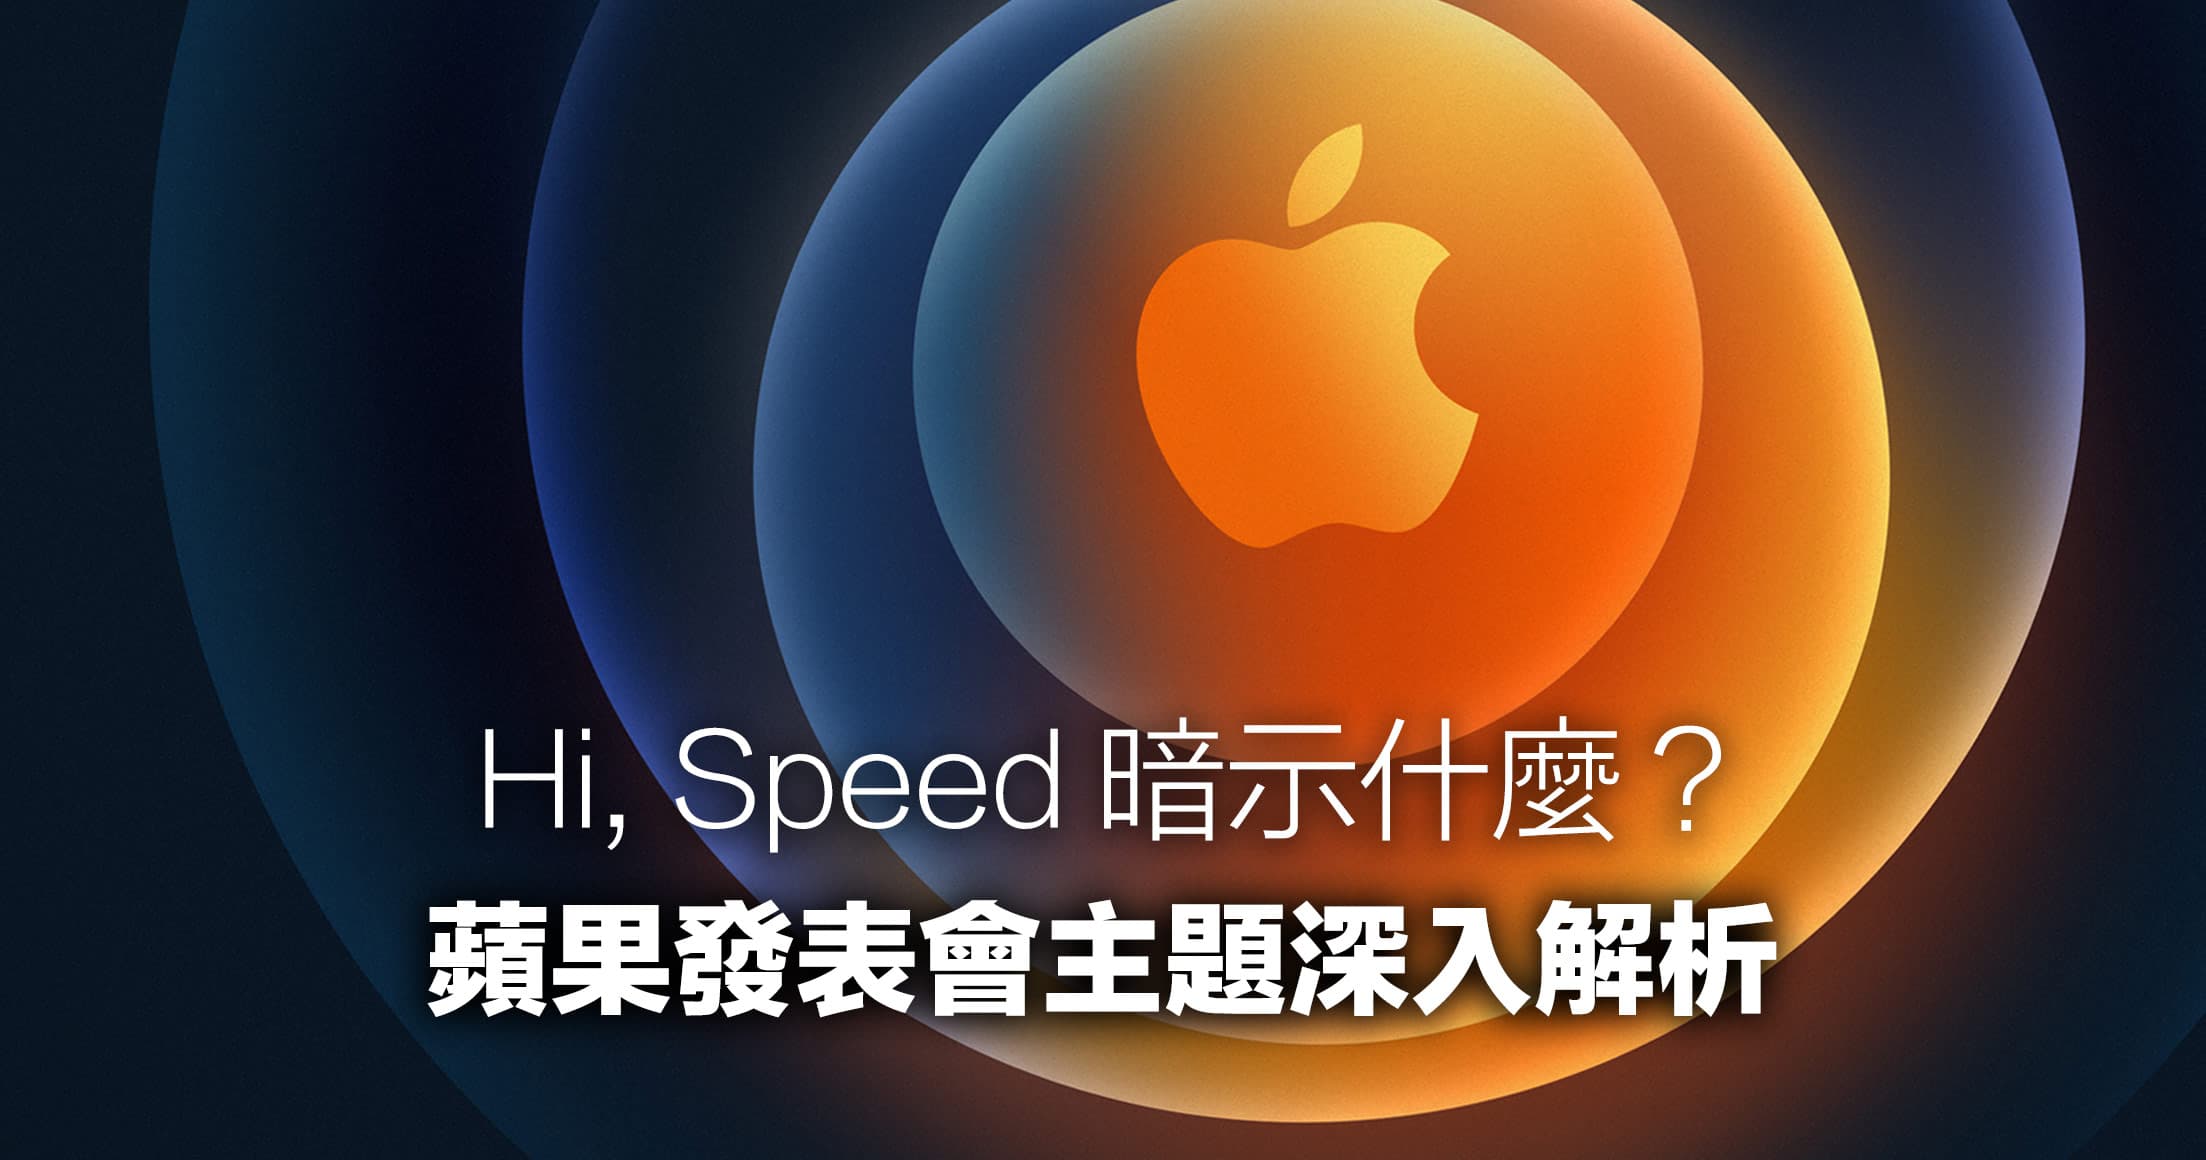 apple event hi speed